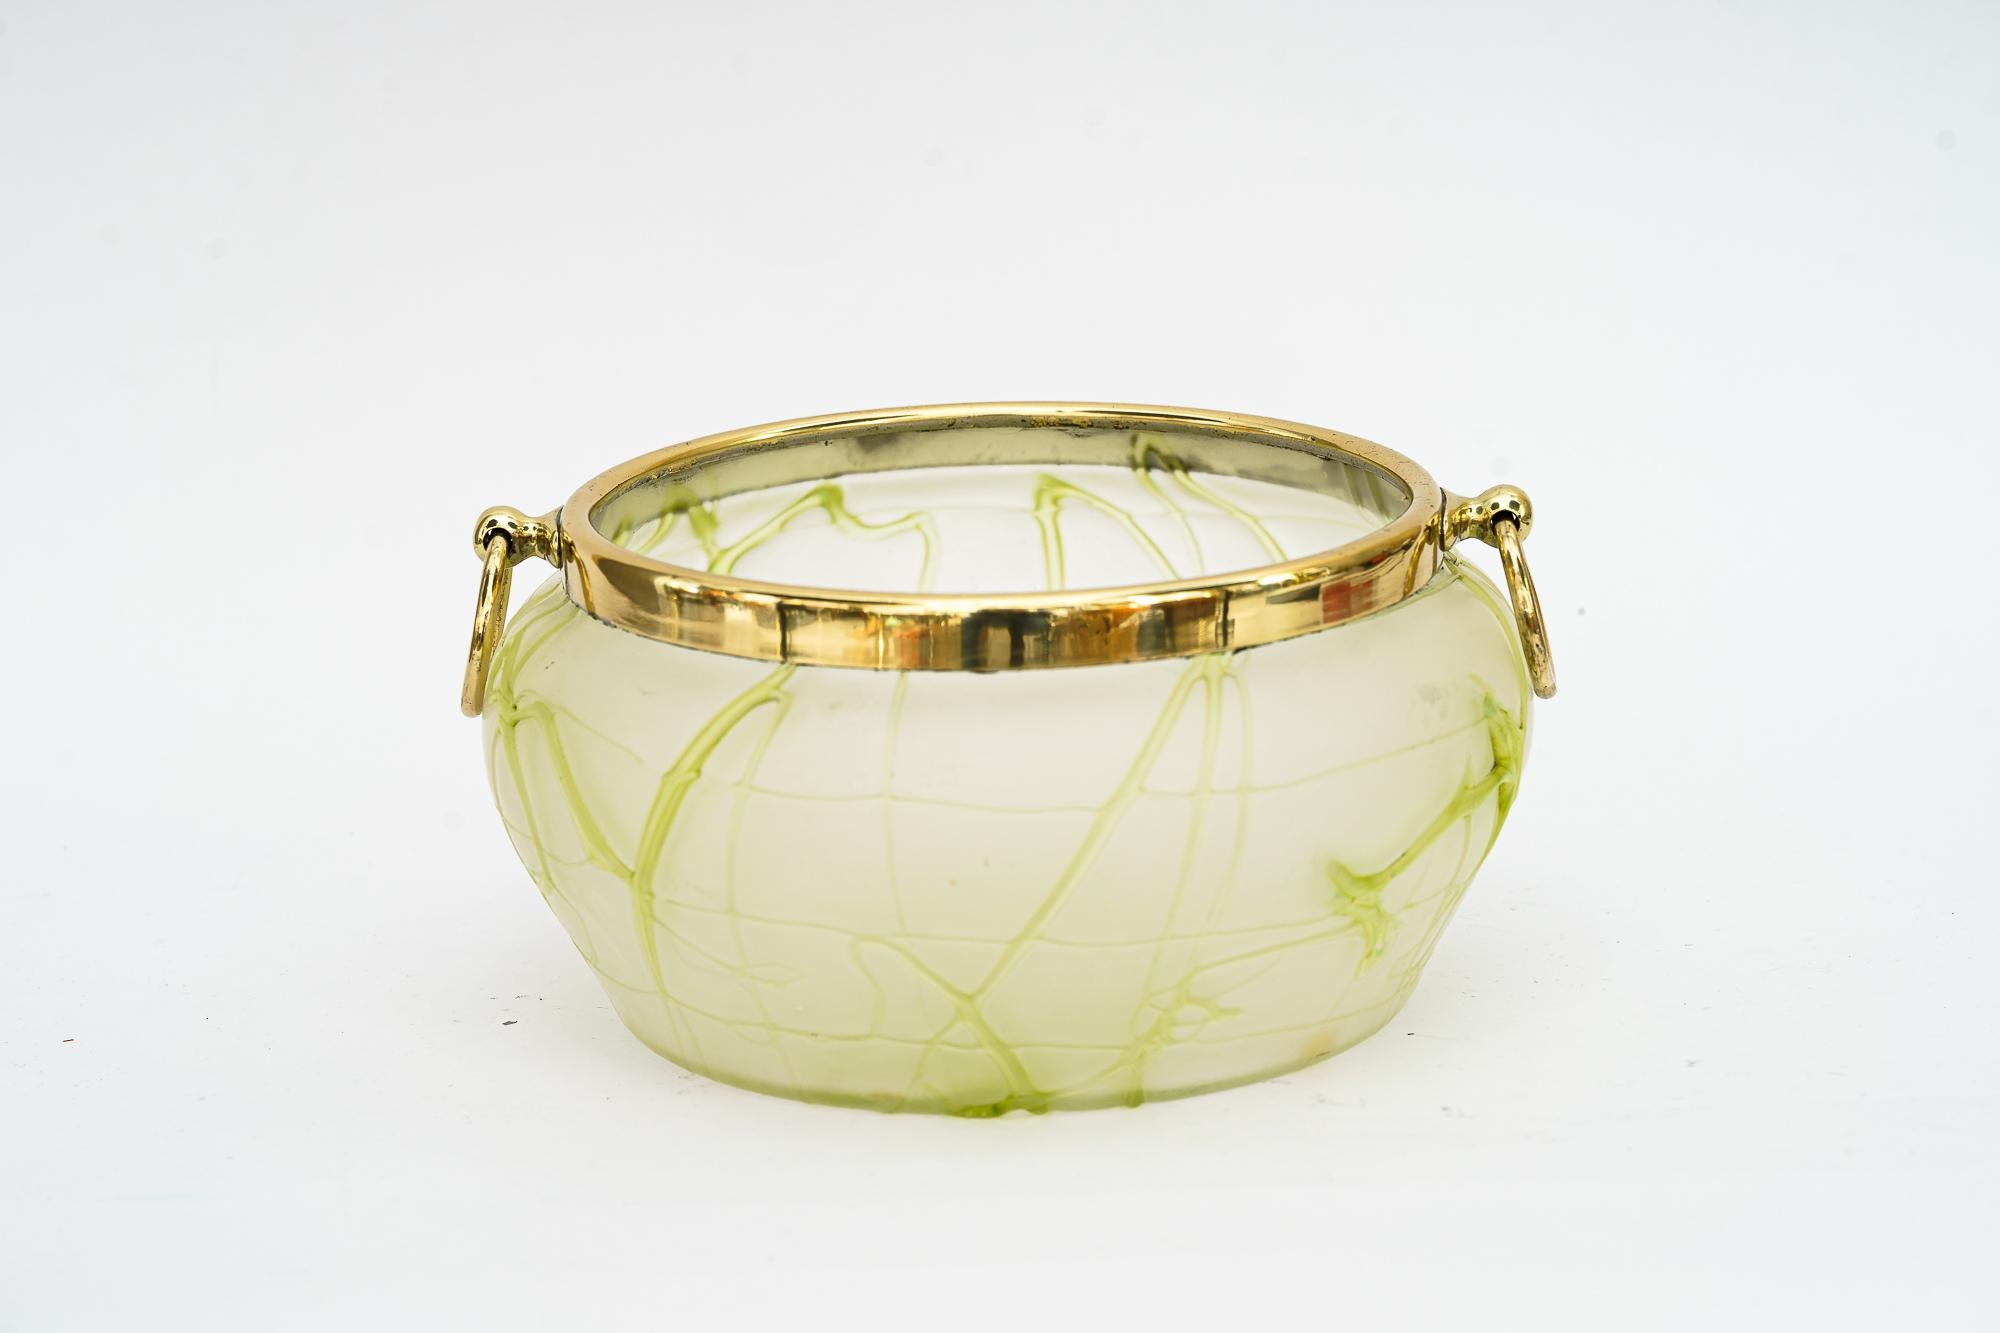 Art Deco palme koenig glass fruit bowl vienna around 1920s
Brass polished lacquered.